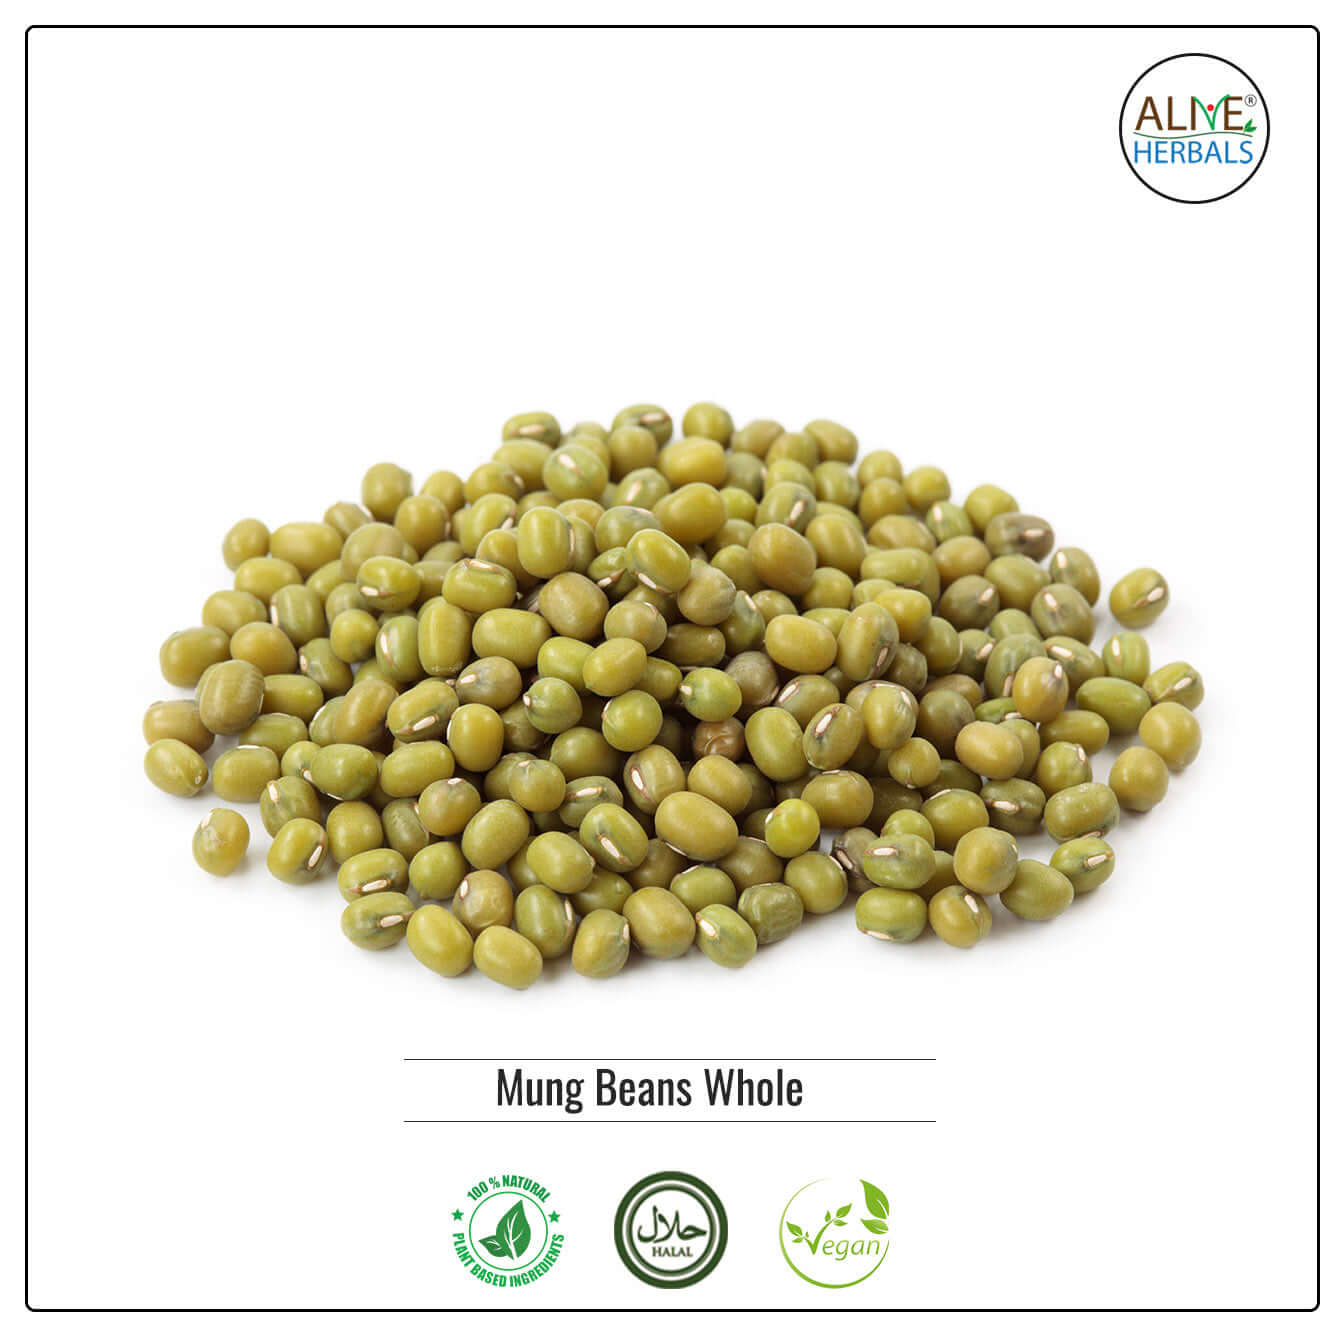 Mung Beans Whole - Shop at Natural Food Store | Alive Herbals.